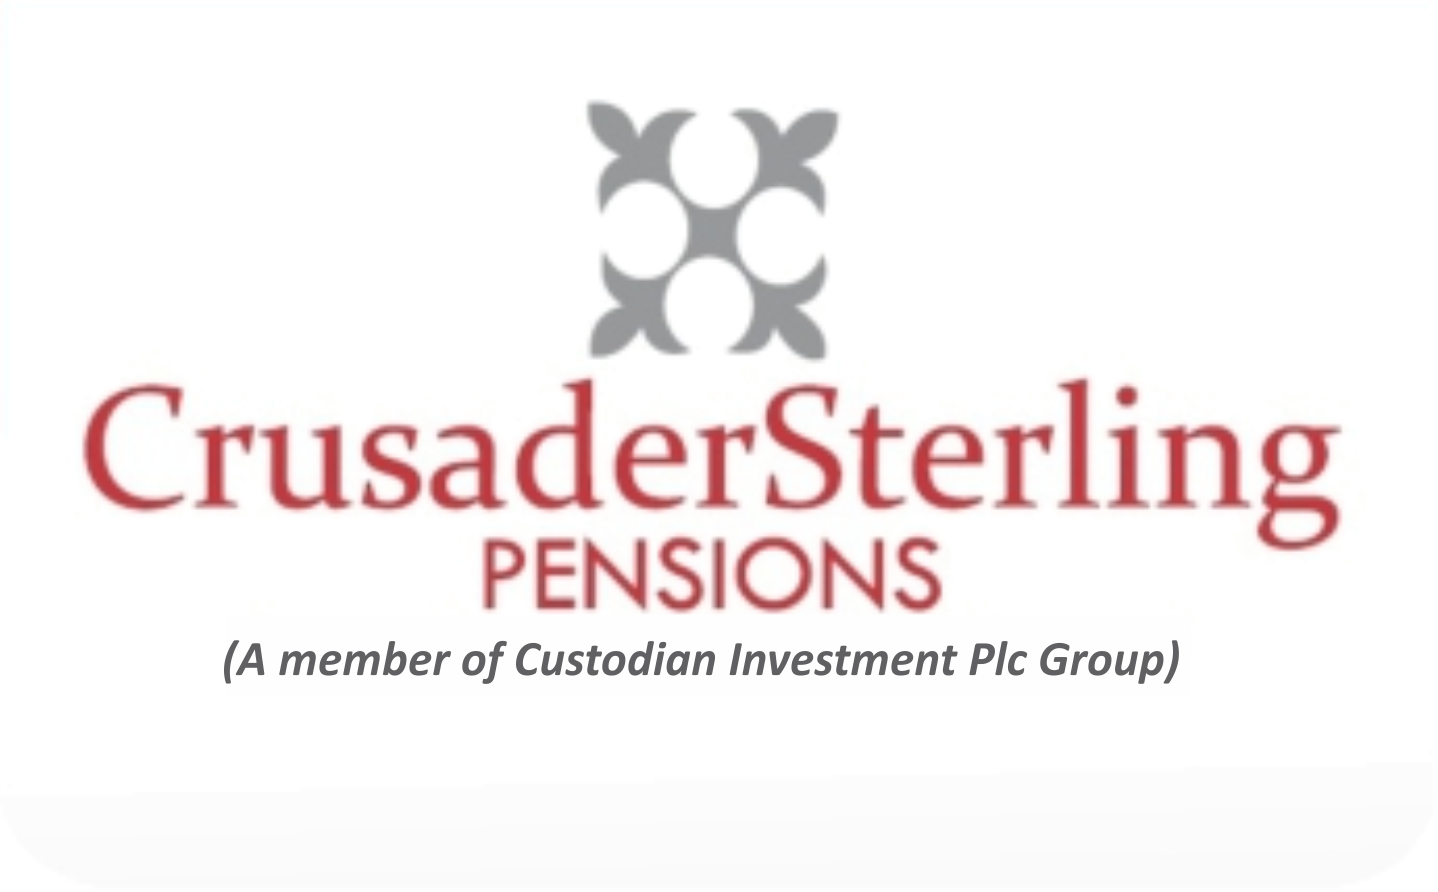 Crusader Sterling Pensions